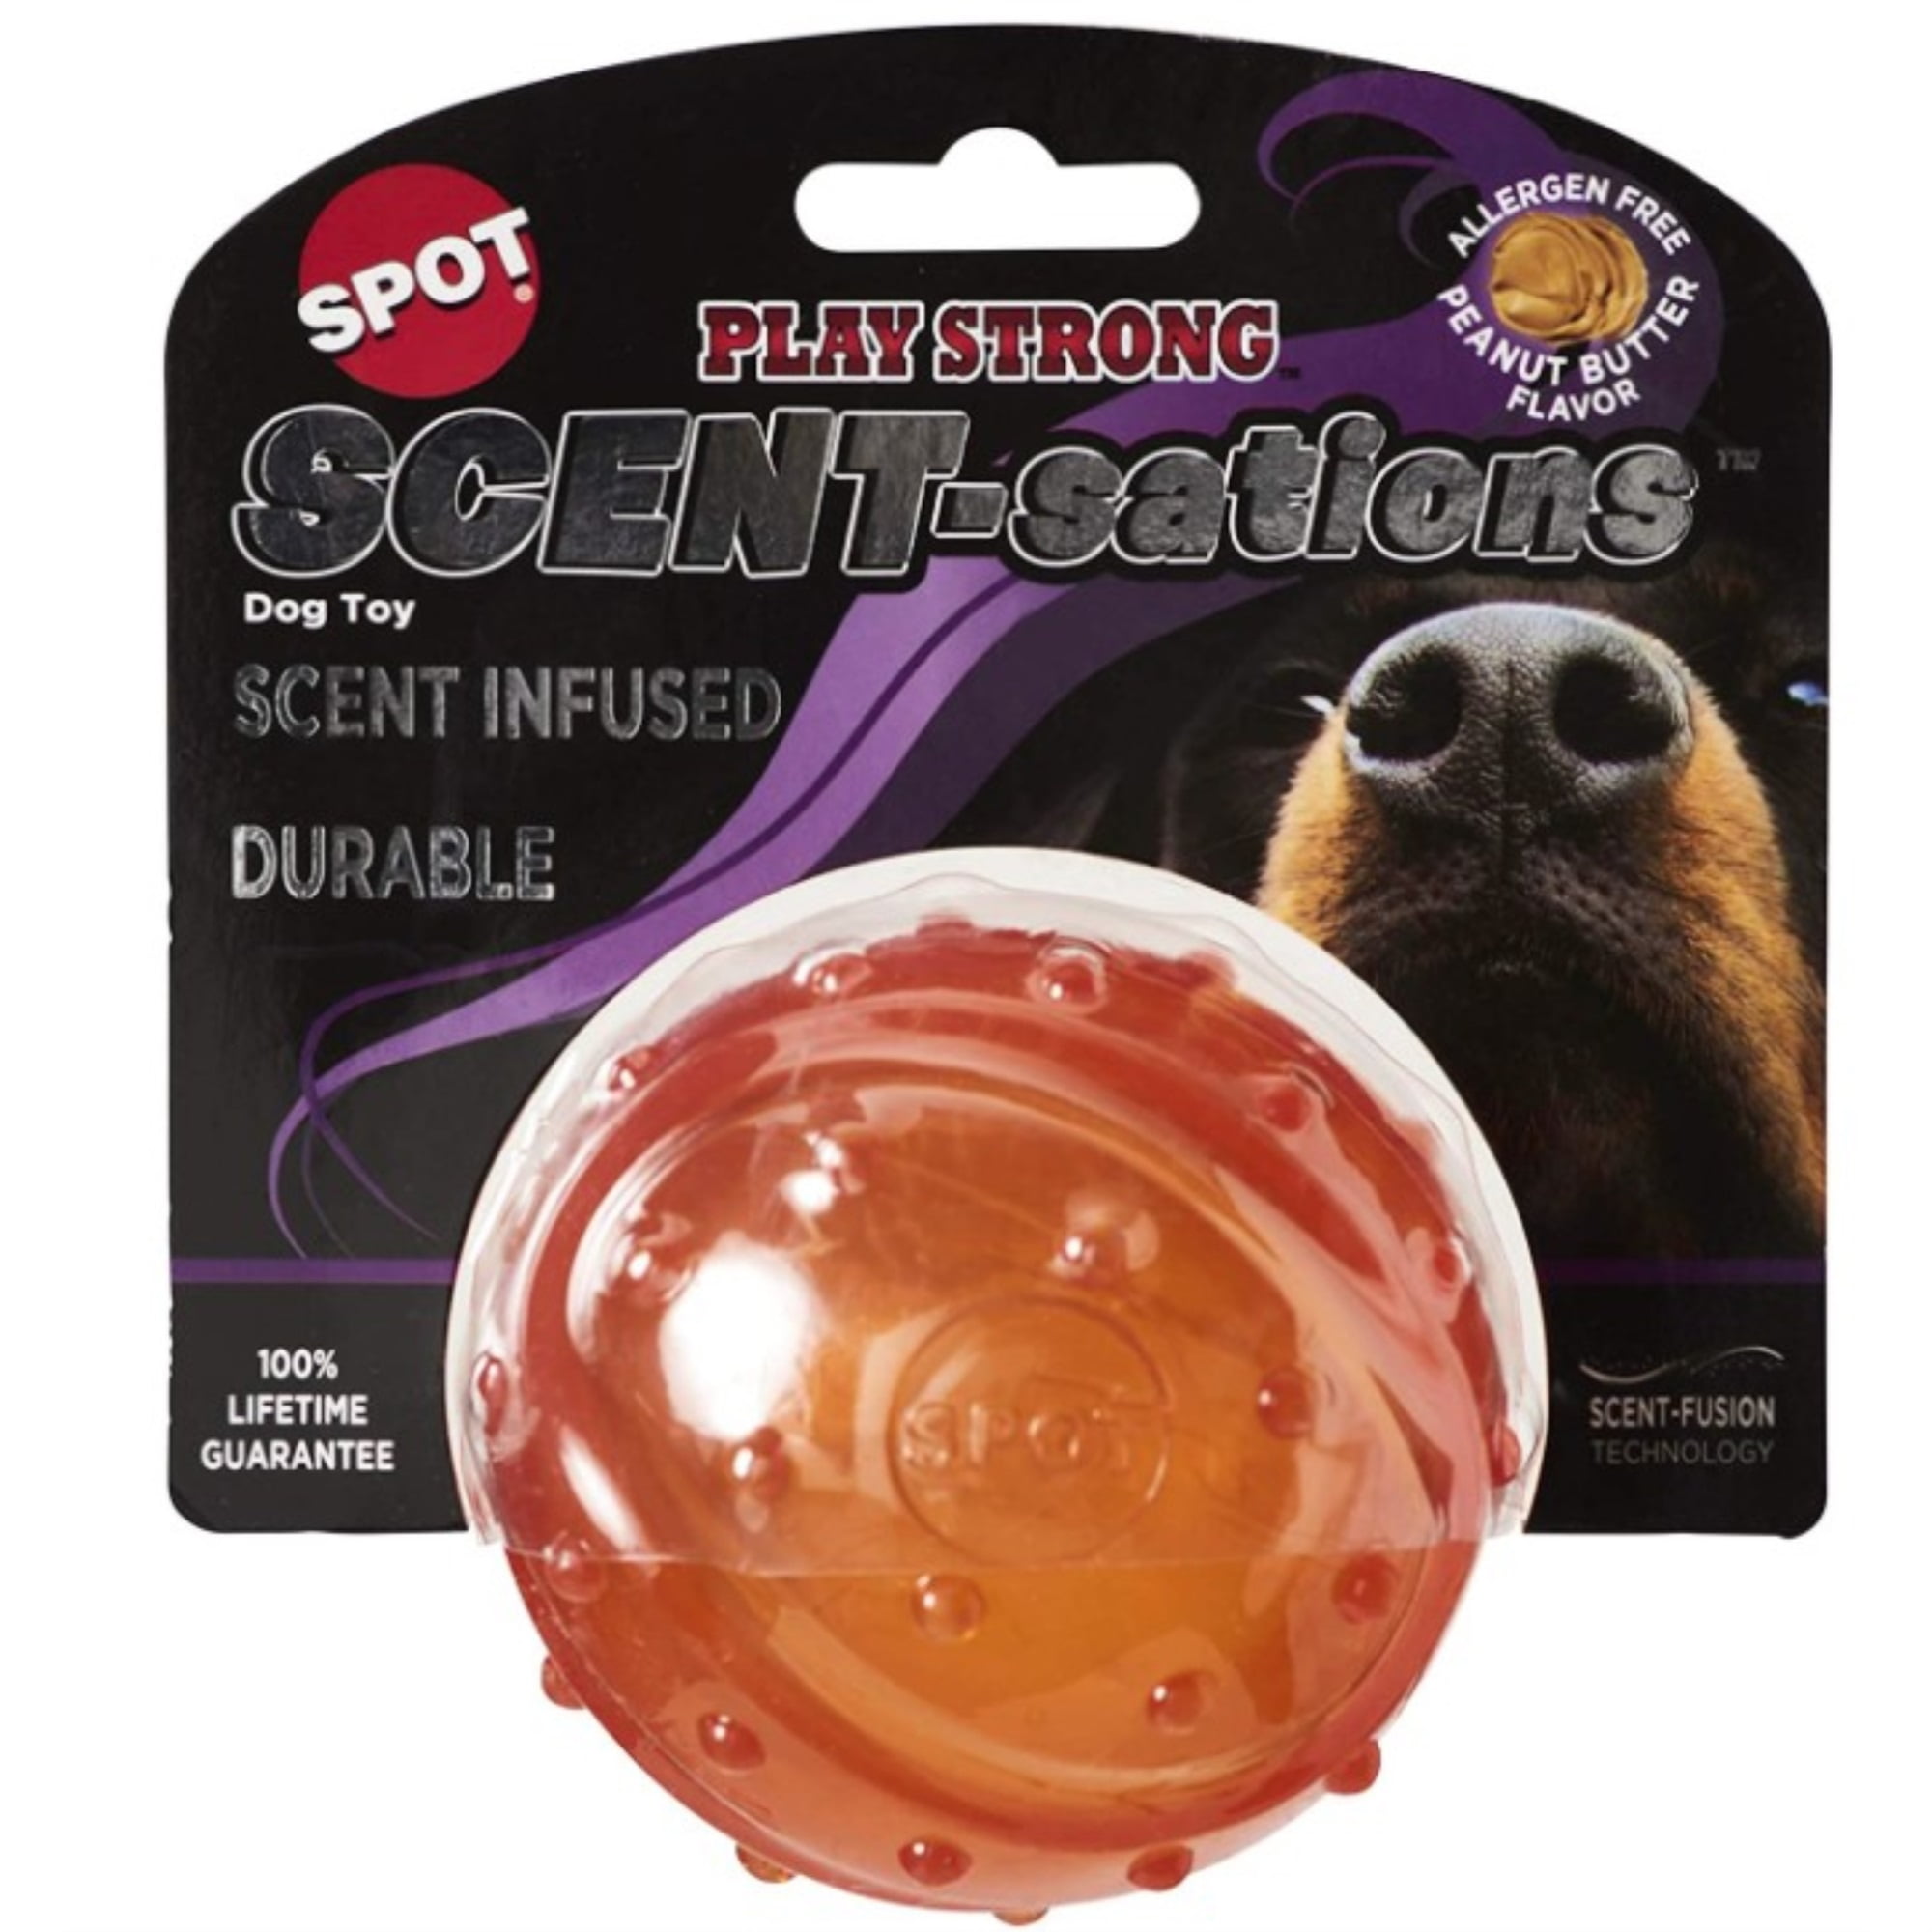 Playology Puppy Sensory Ball Peanut Butter Dog Toy, Blue, Small